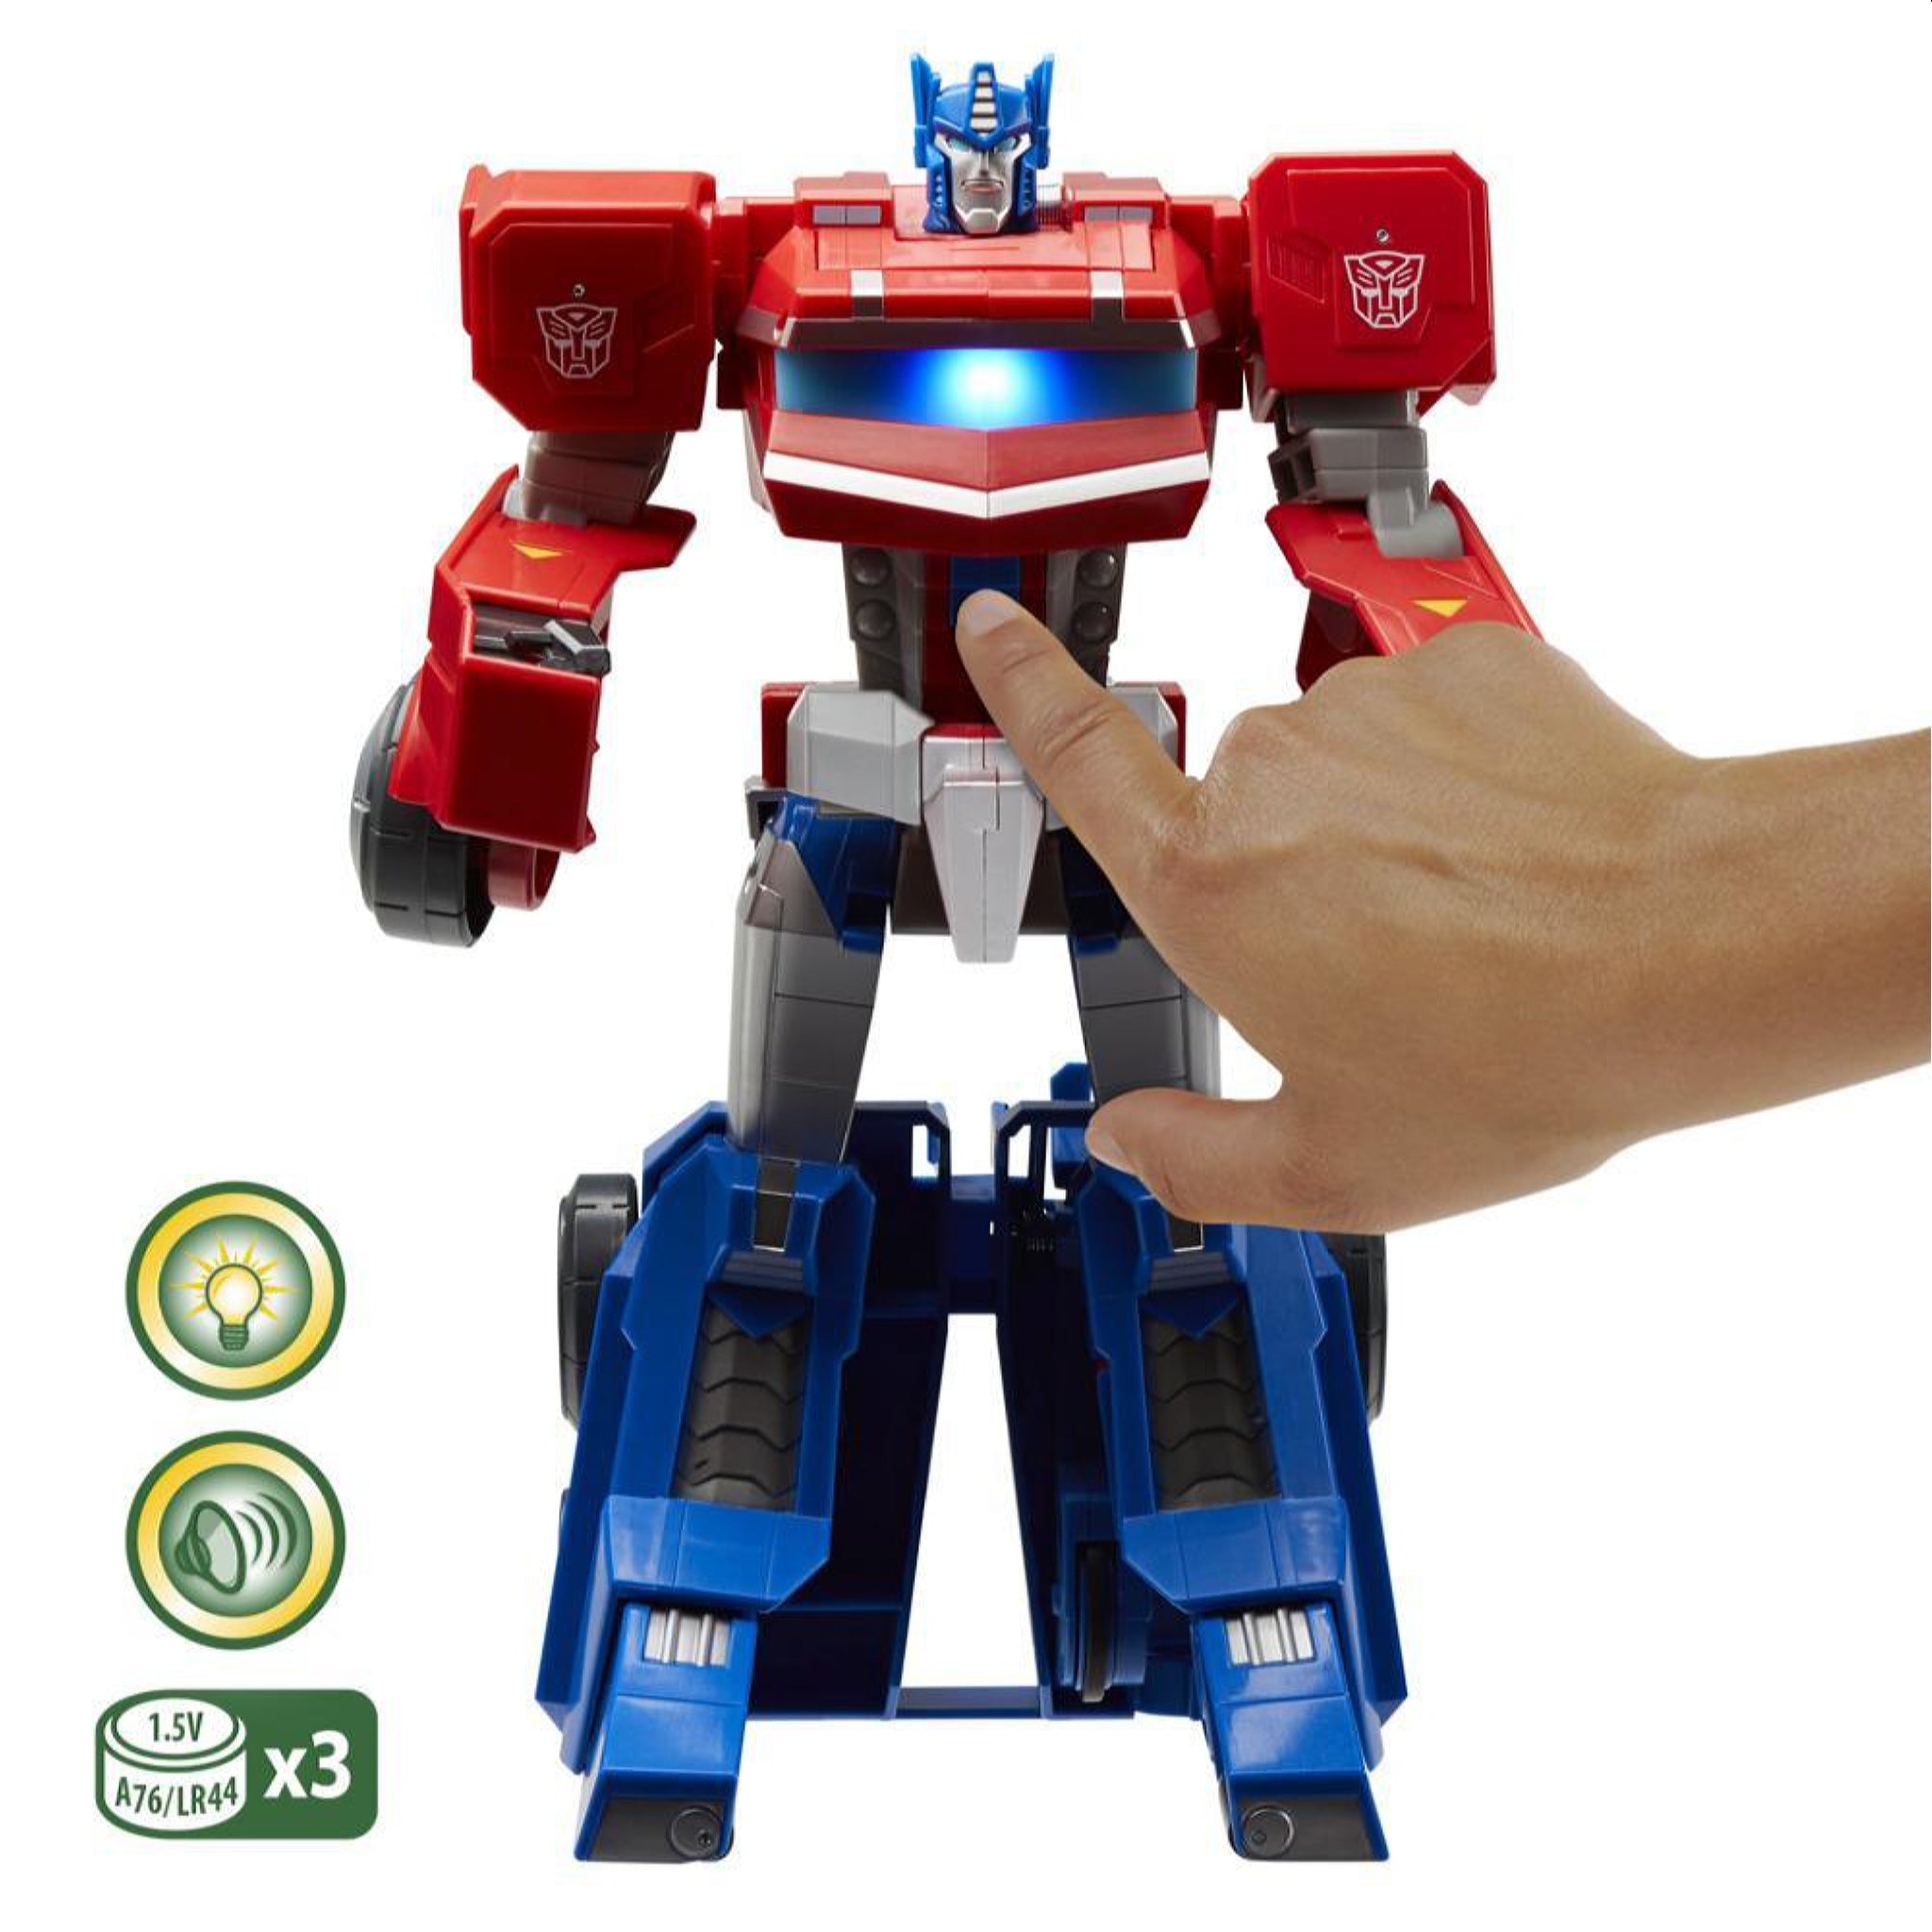 Transformers Cyberverse Adventures Dinobots Unite Roll N’ Change Optimus Prime Figure